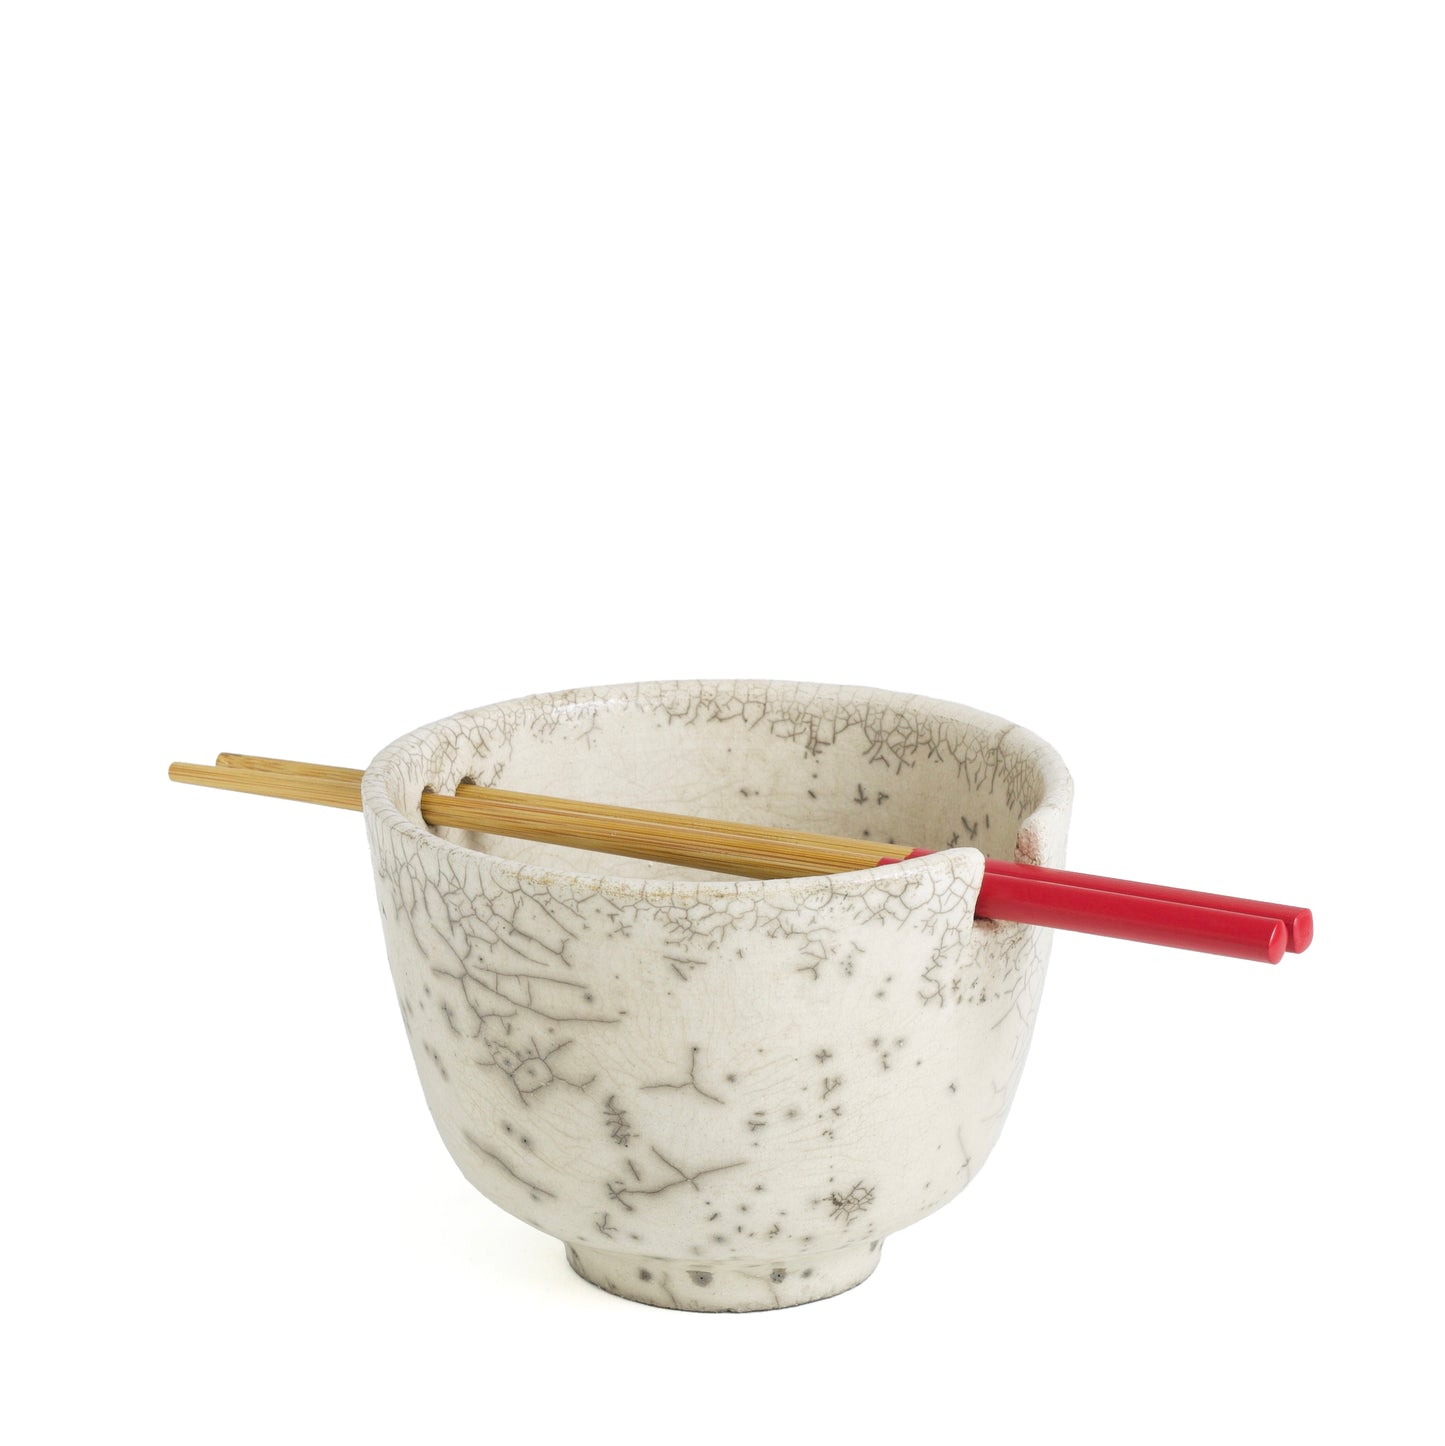 Japanese Ramen Bowls Raku Ceramic White Crackle Set of 2